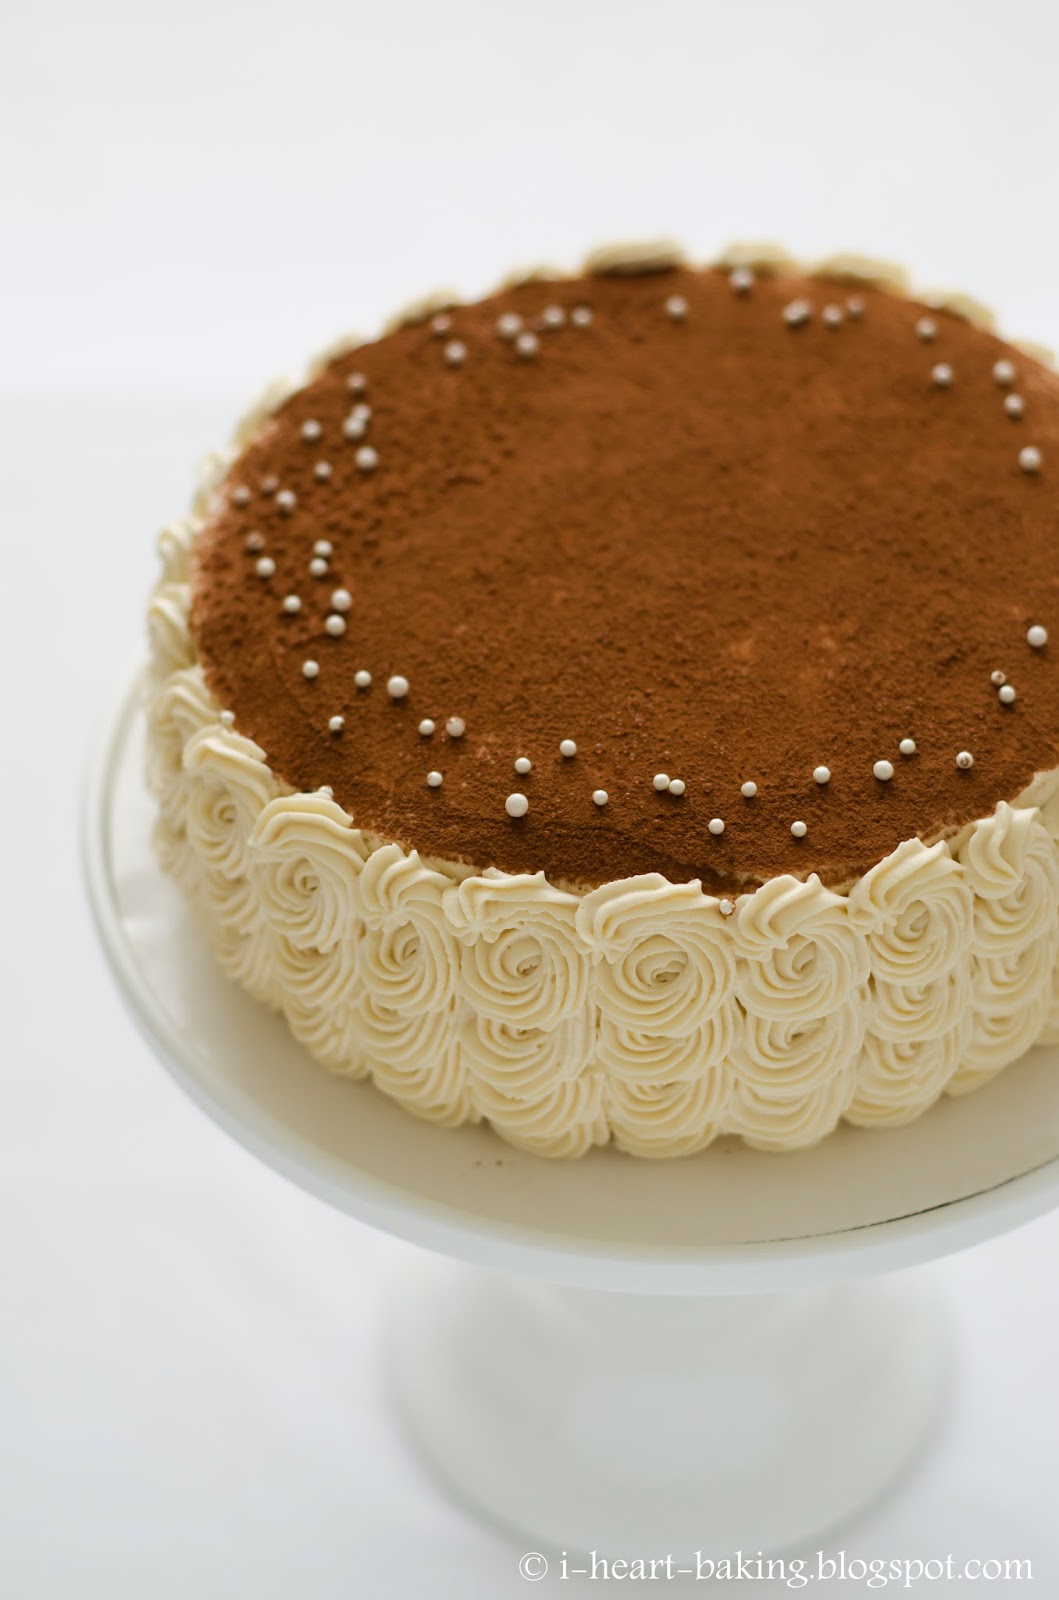 i heart baking!: tiramisu birthday cake with piped swirl ruffle sides